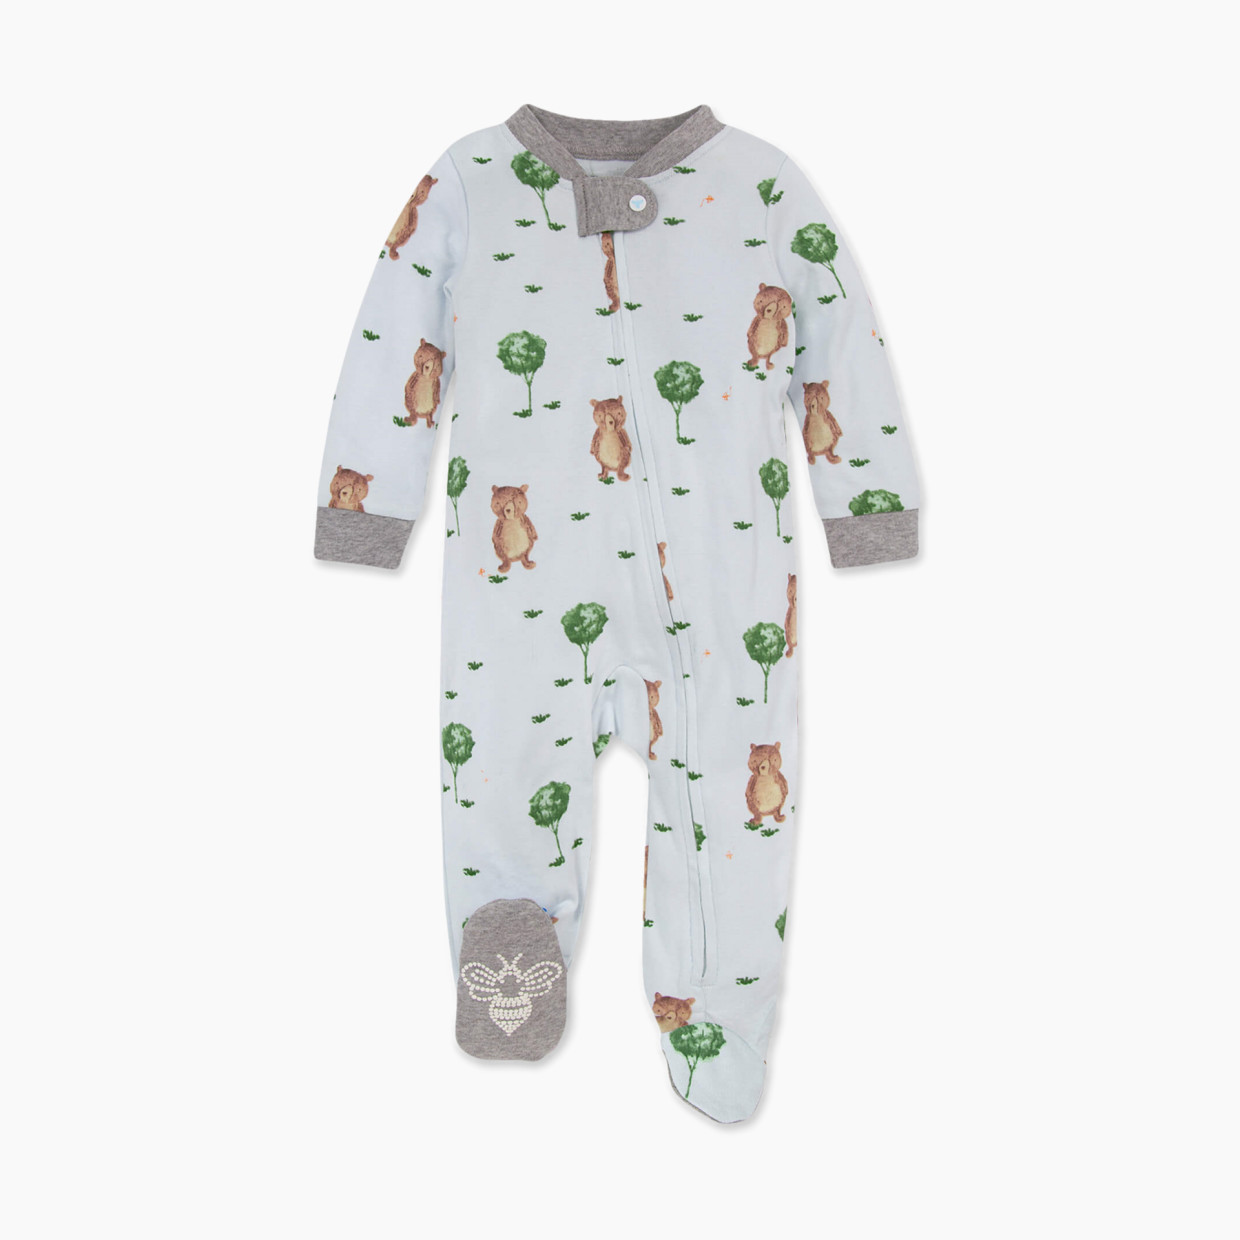 Burt's Bees Baby Organic Sleep & Play Footie Pajamas - Storybook Bears, 3-6 Months.